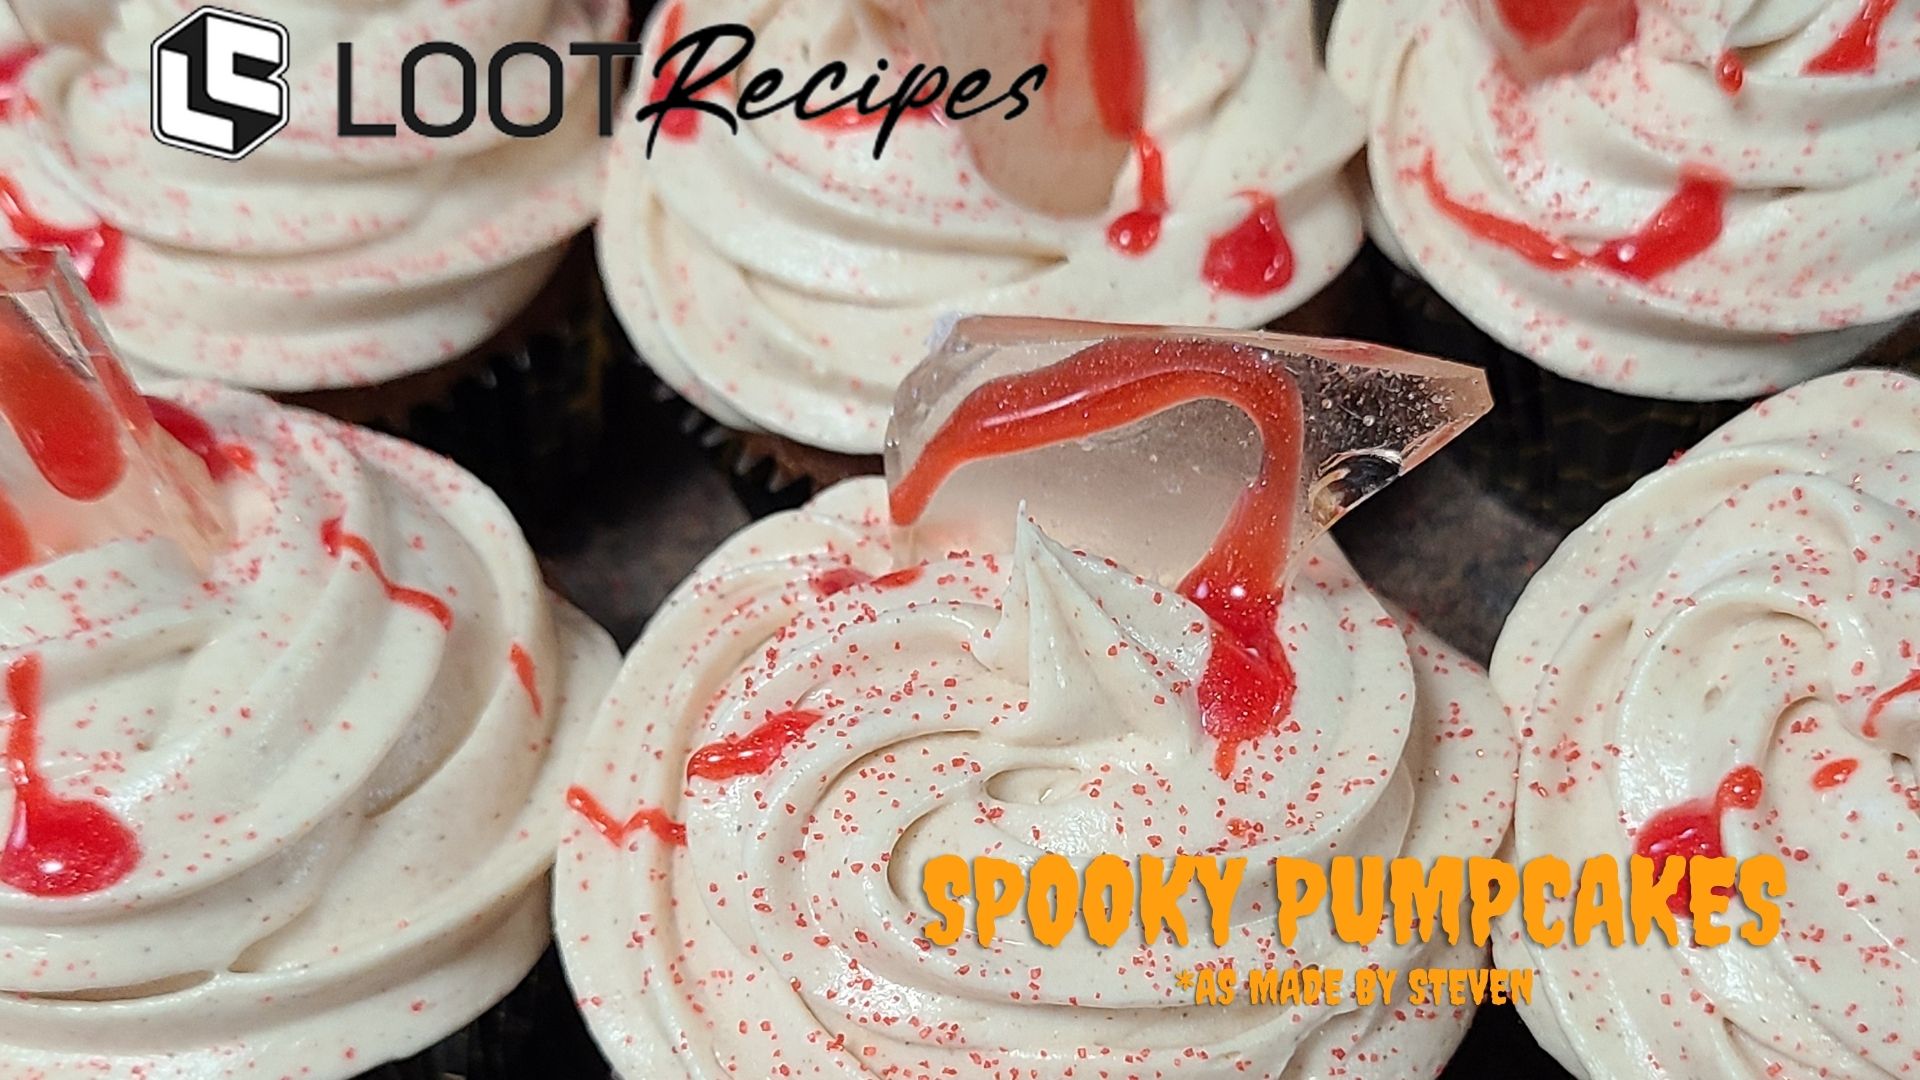 Looter Recipe: Spooky Pumpcakes